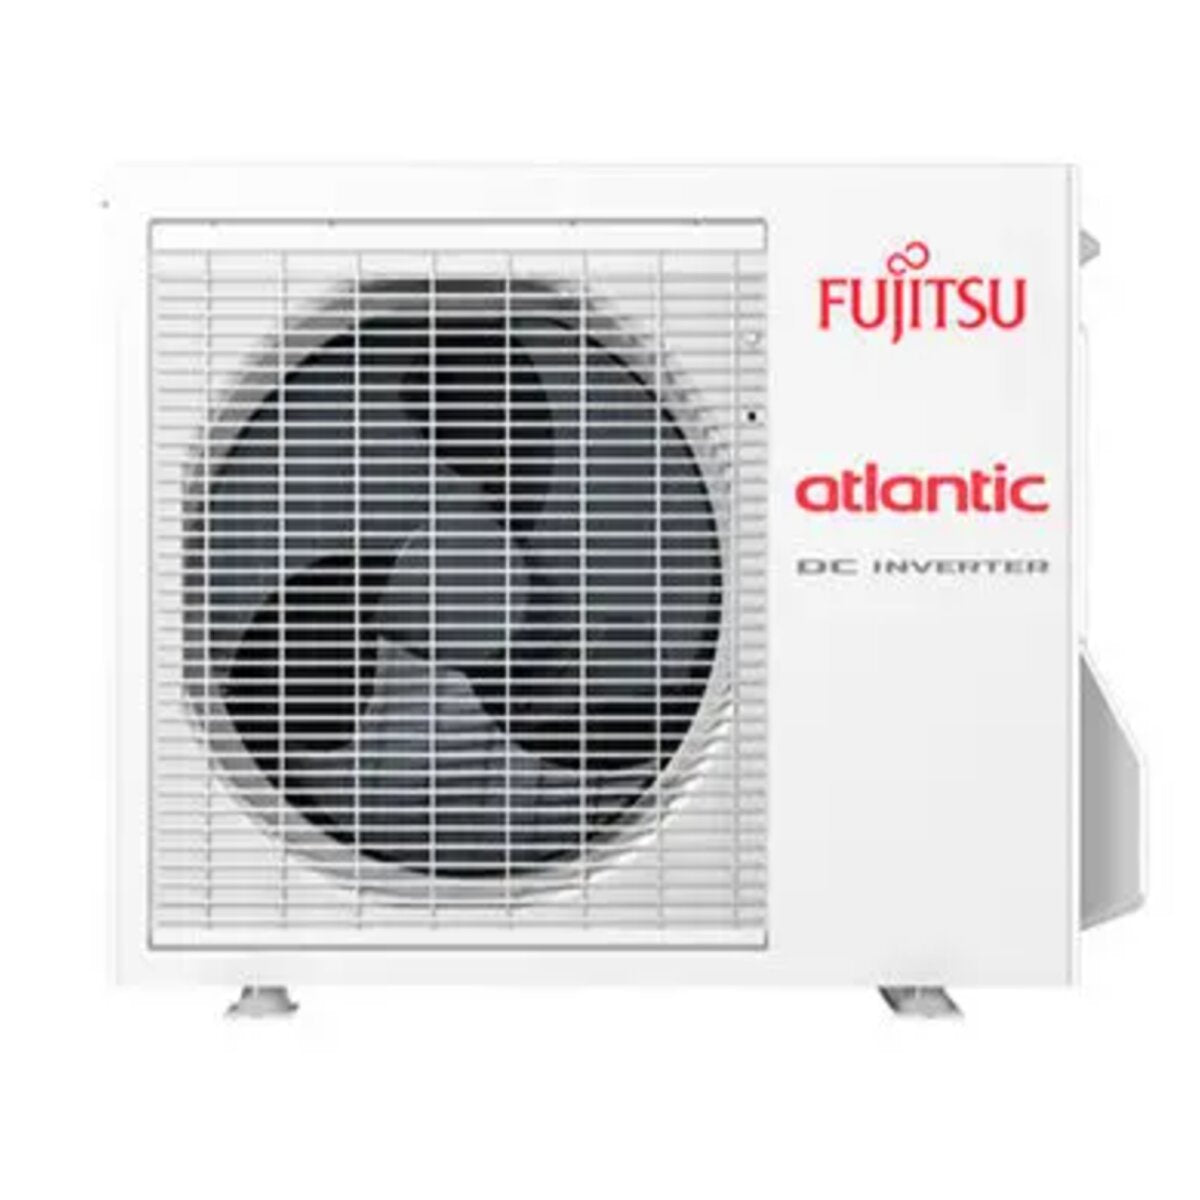 Atlantic Calypso Split inverter heat pump water heater 200 L class A+